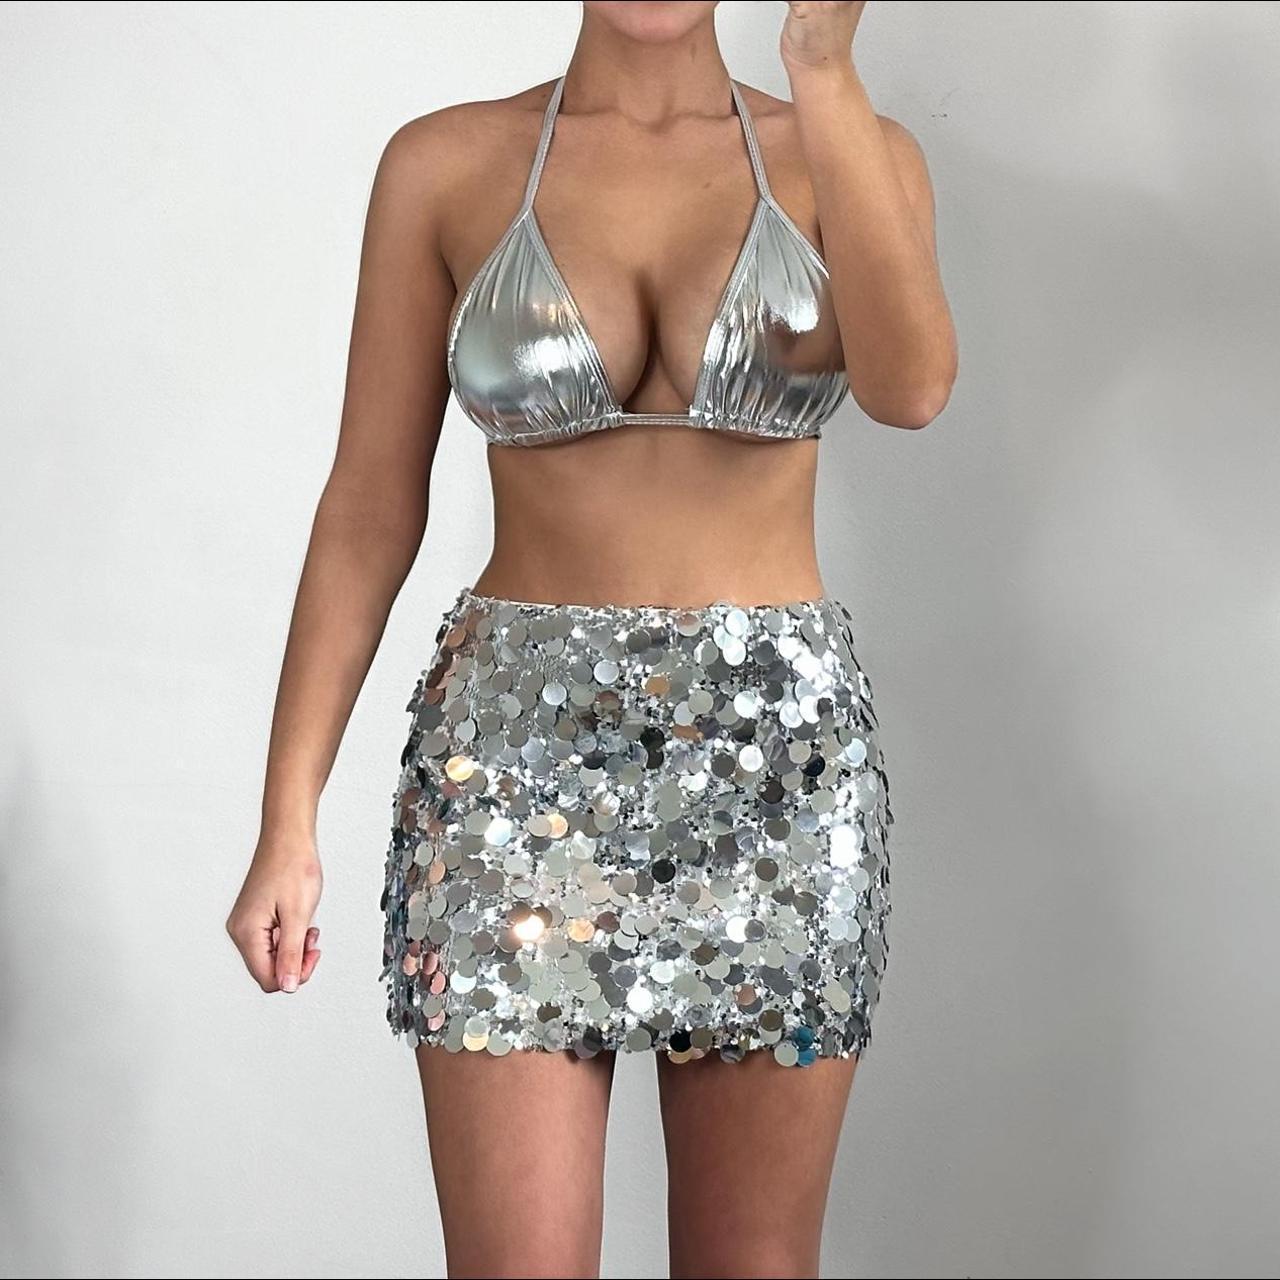 Women's Metallic Rave Outfit Sequin Silver Crop Top Bra Skirt